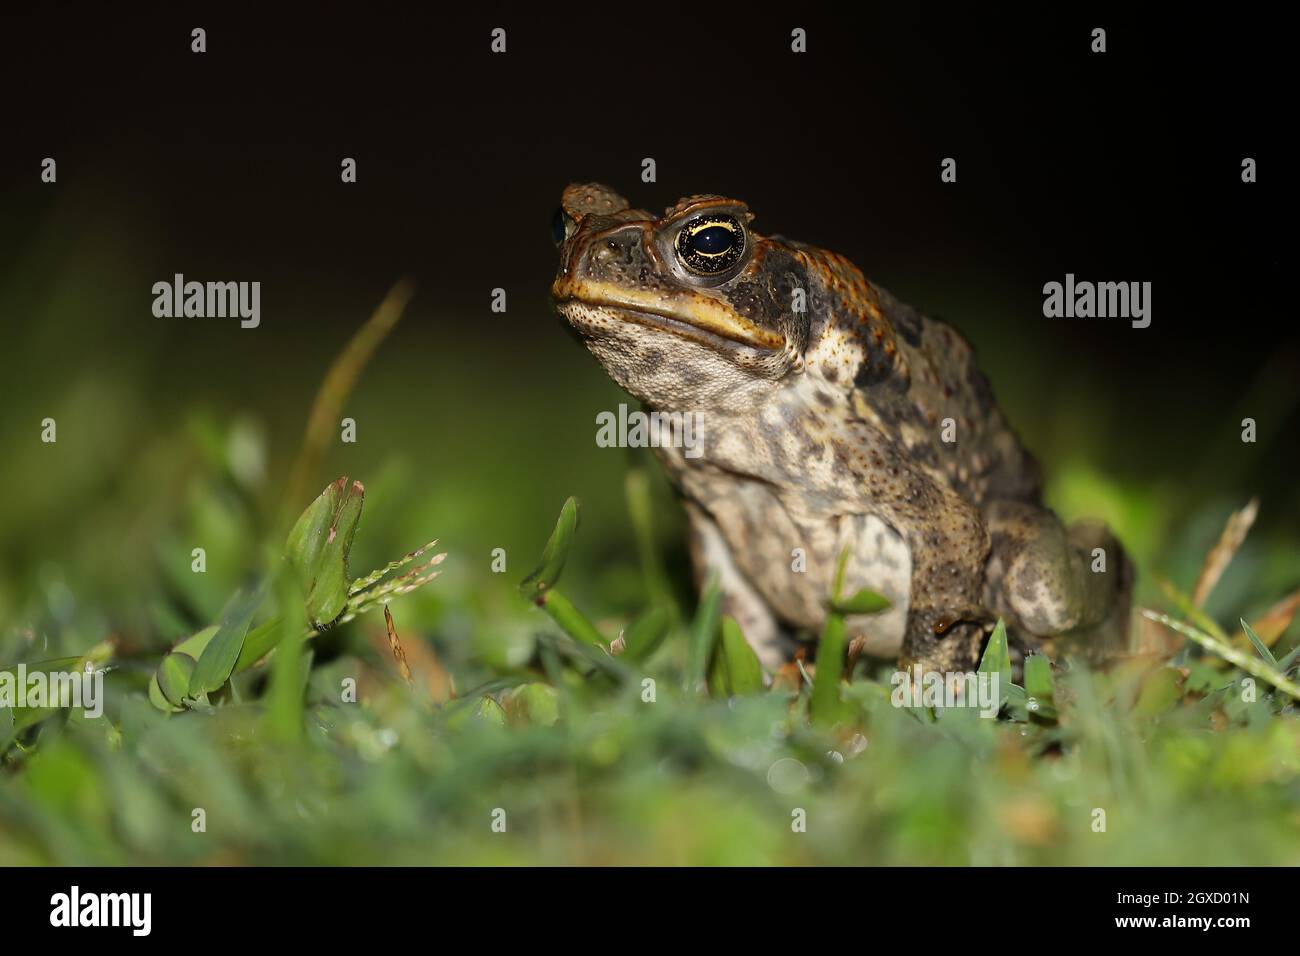 Cane toad (Rhinella marina) in Hawaii Stock Photo